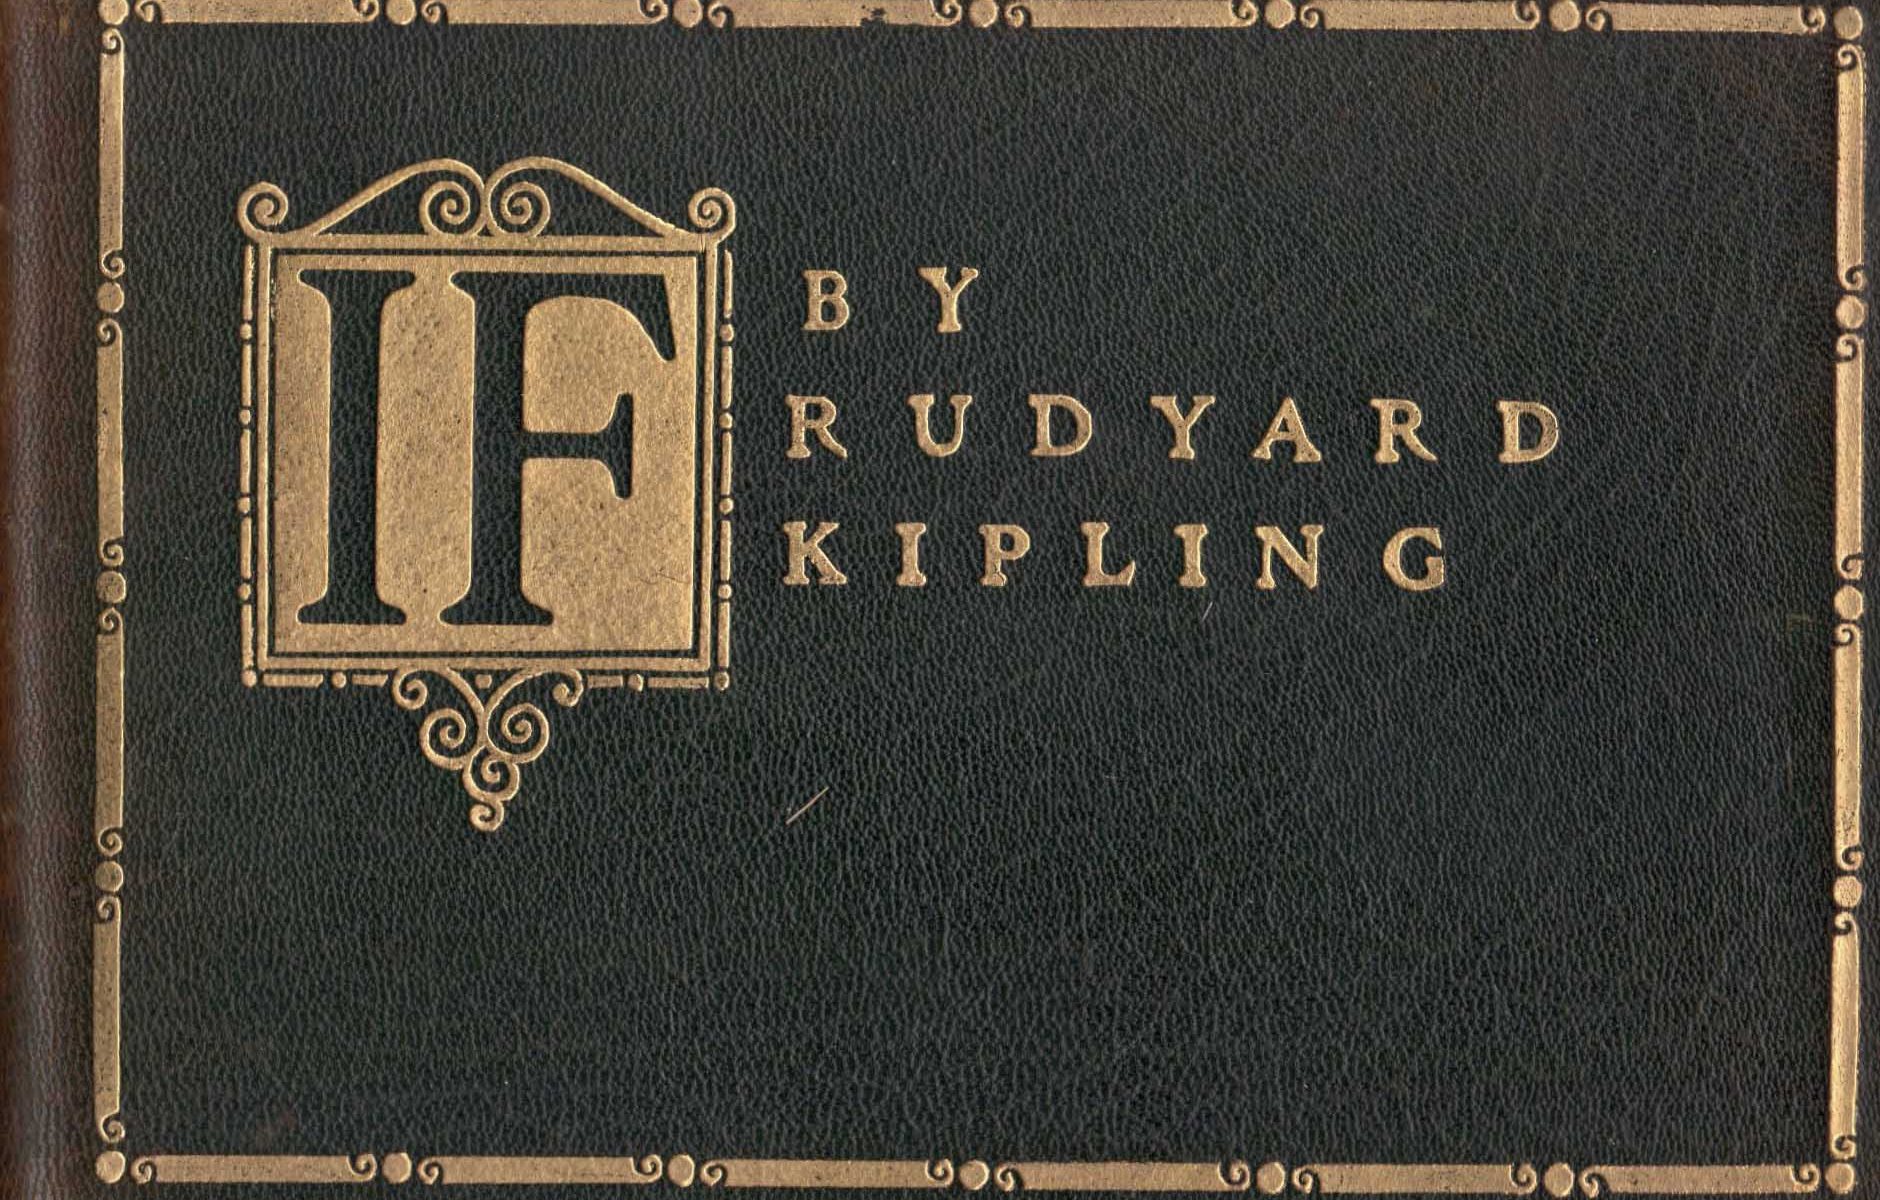 Bookcover of Rudyard Kipling's poem If